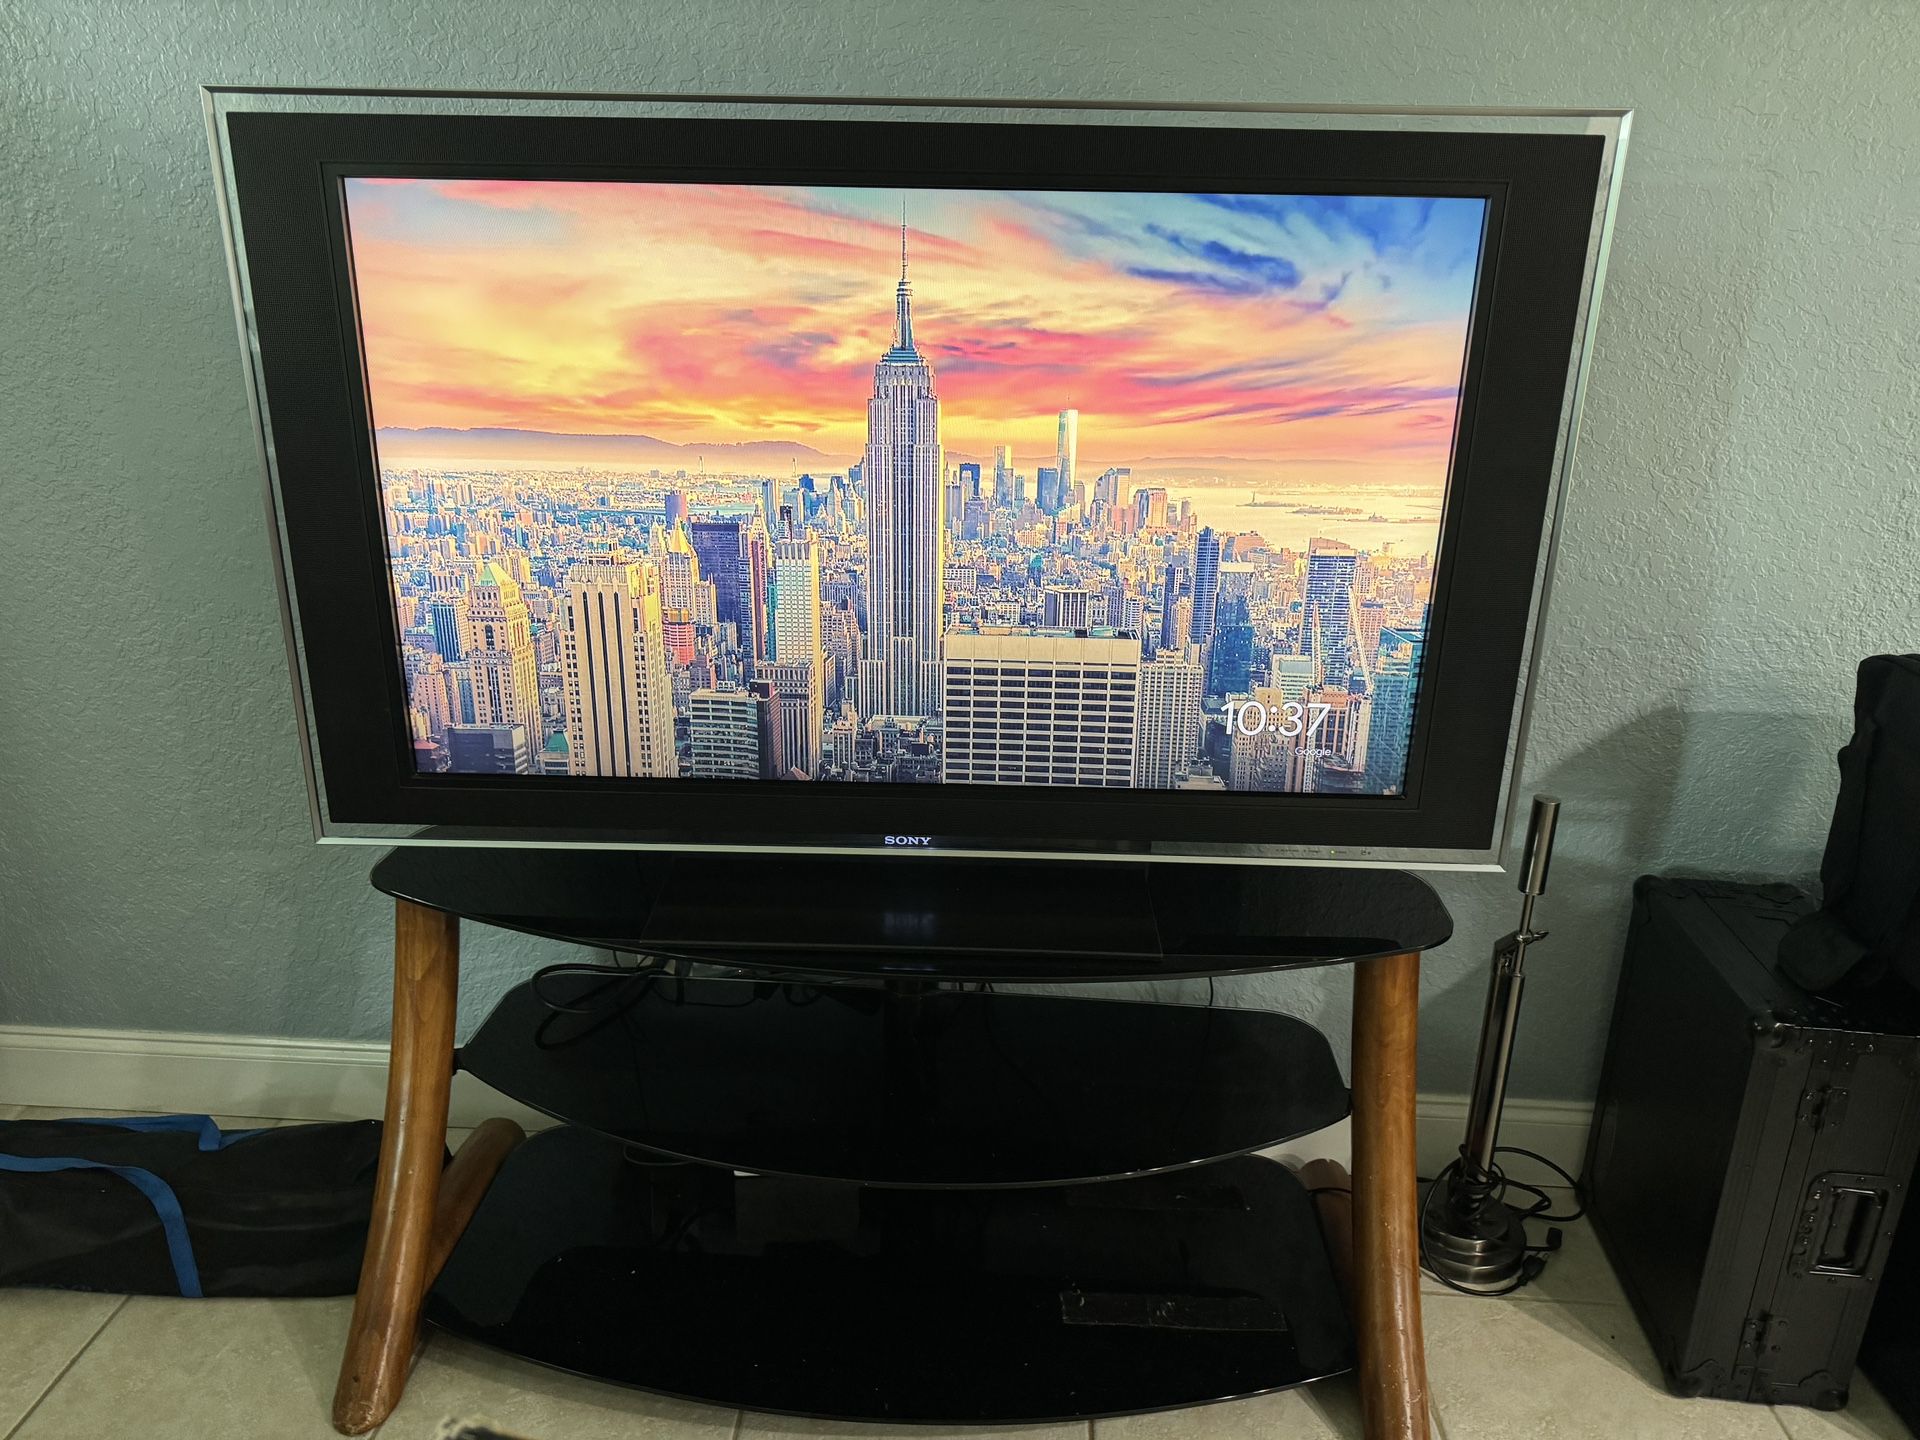 Sony KDL-52XBR4 52" BRAVIA XBR LCD TV